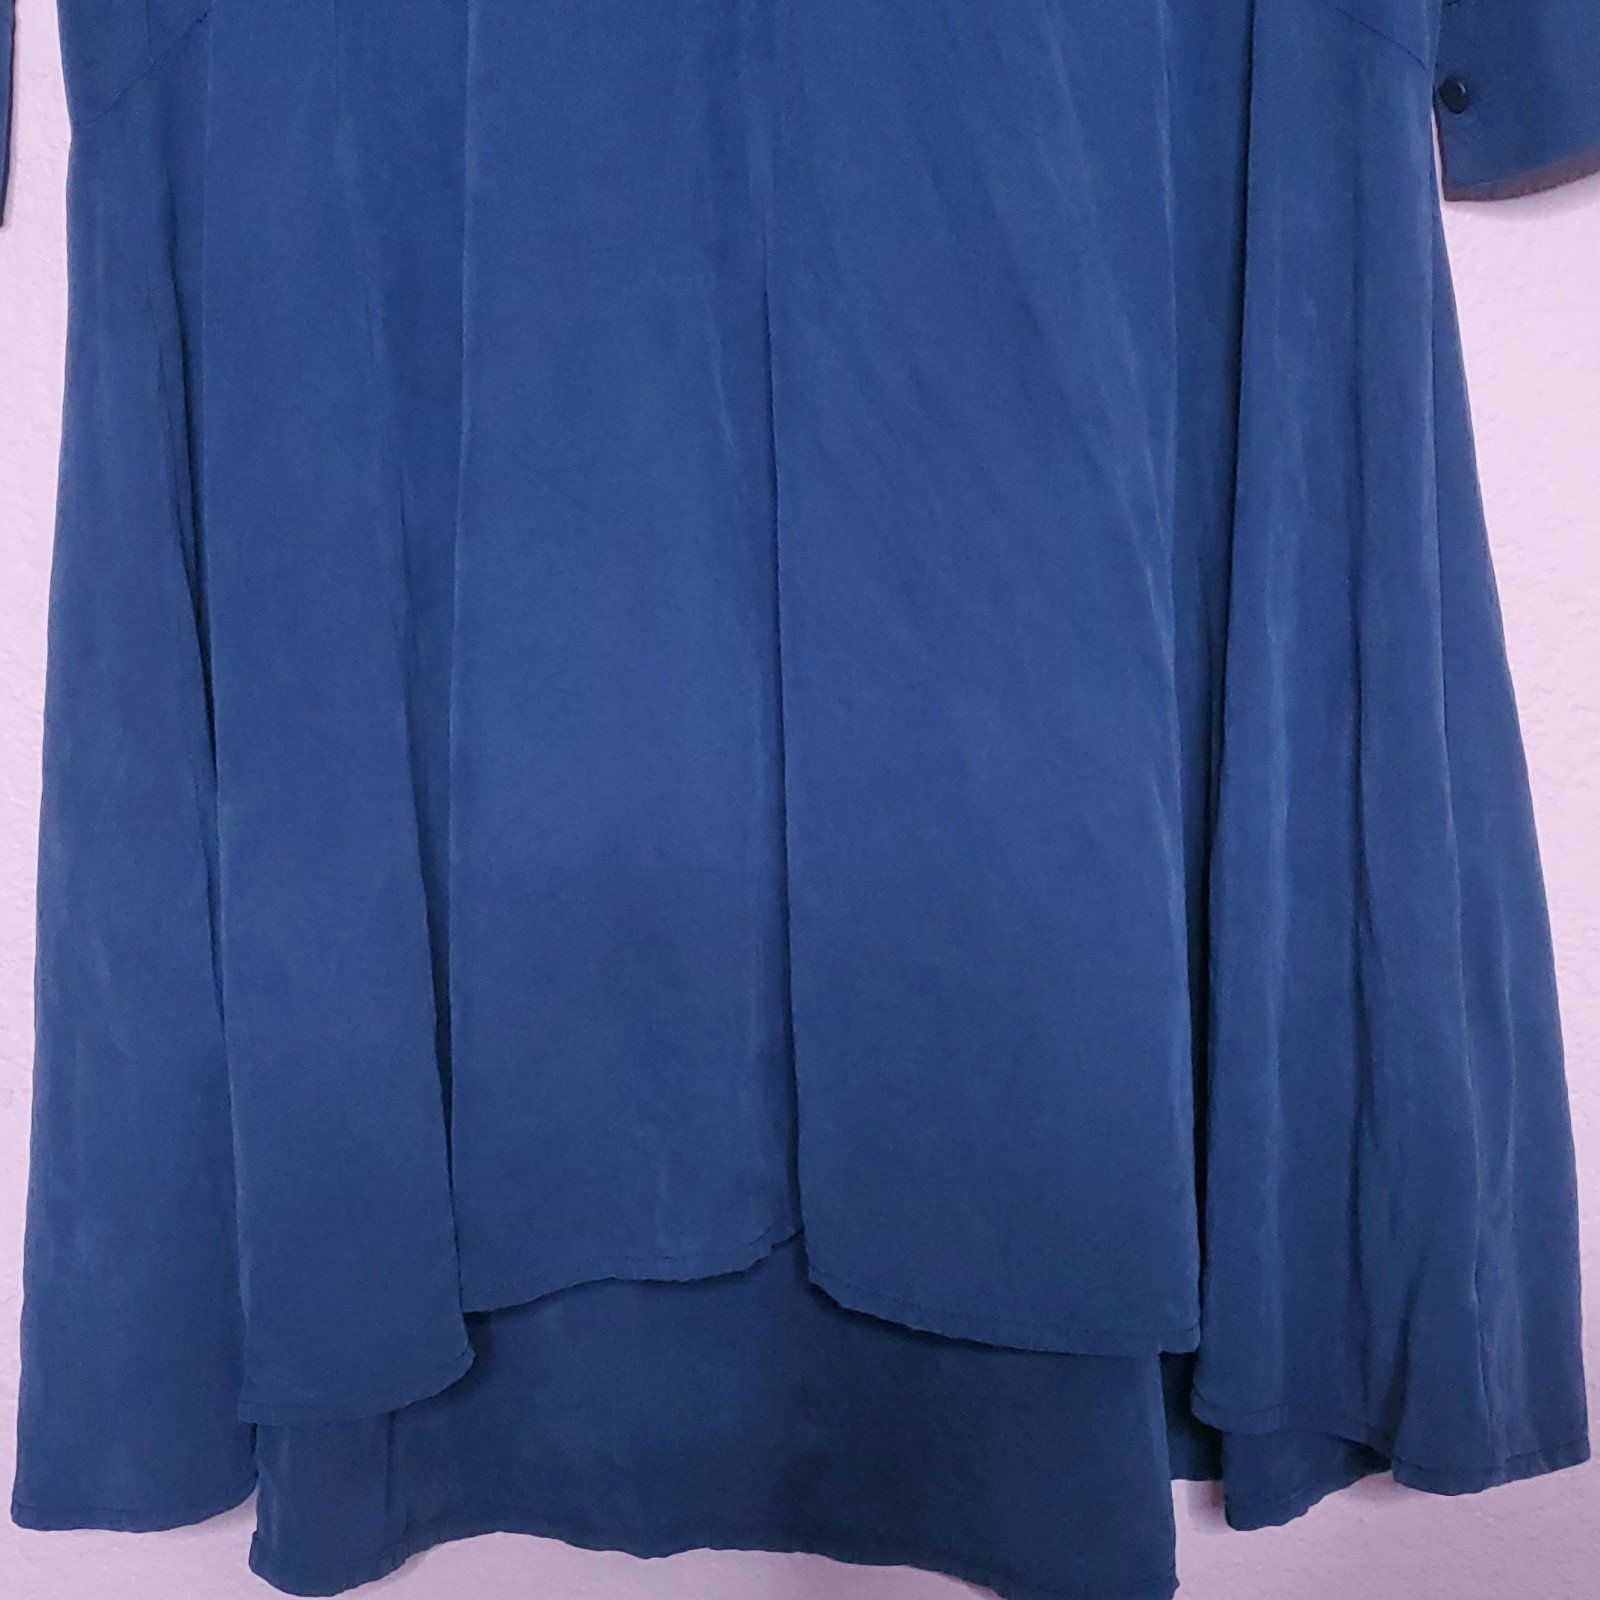 Gorgeous DressAllSaints Tiami Long Sleeve Shirt Dress in Navy Blue Ok7MdSnMG Great